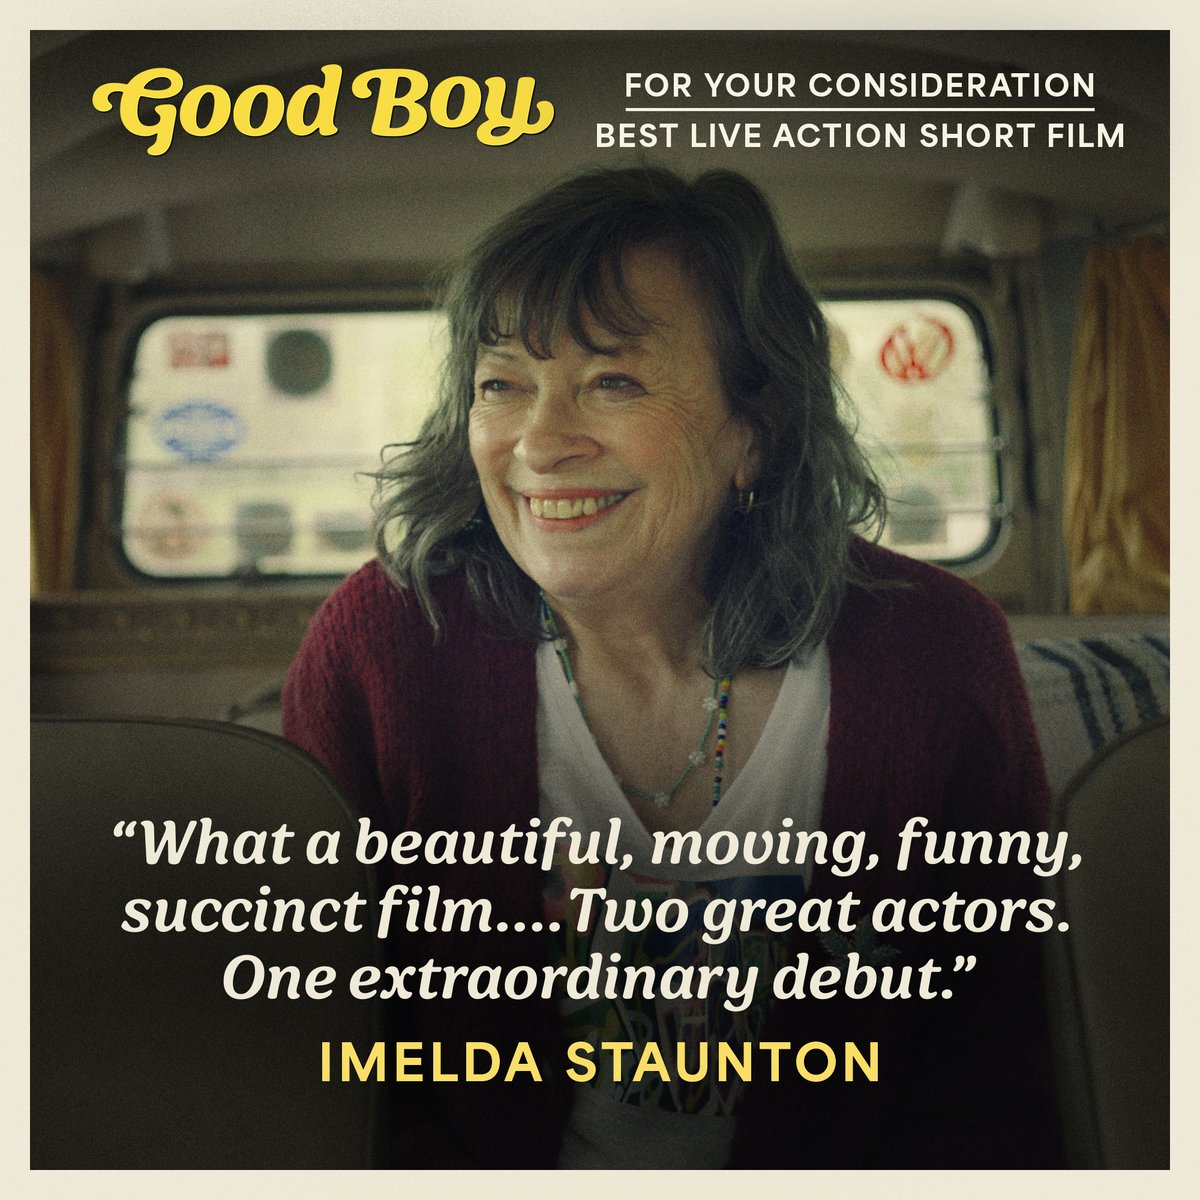 Imelda Staunton on Good Boy

#ImeldaStaunton #AcademyAwards #Oscars96 @tomstupot #BenWhishaw #MarionBailey #EmmaThompson #shortfilm #awardseason